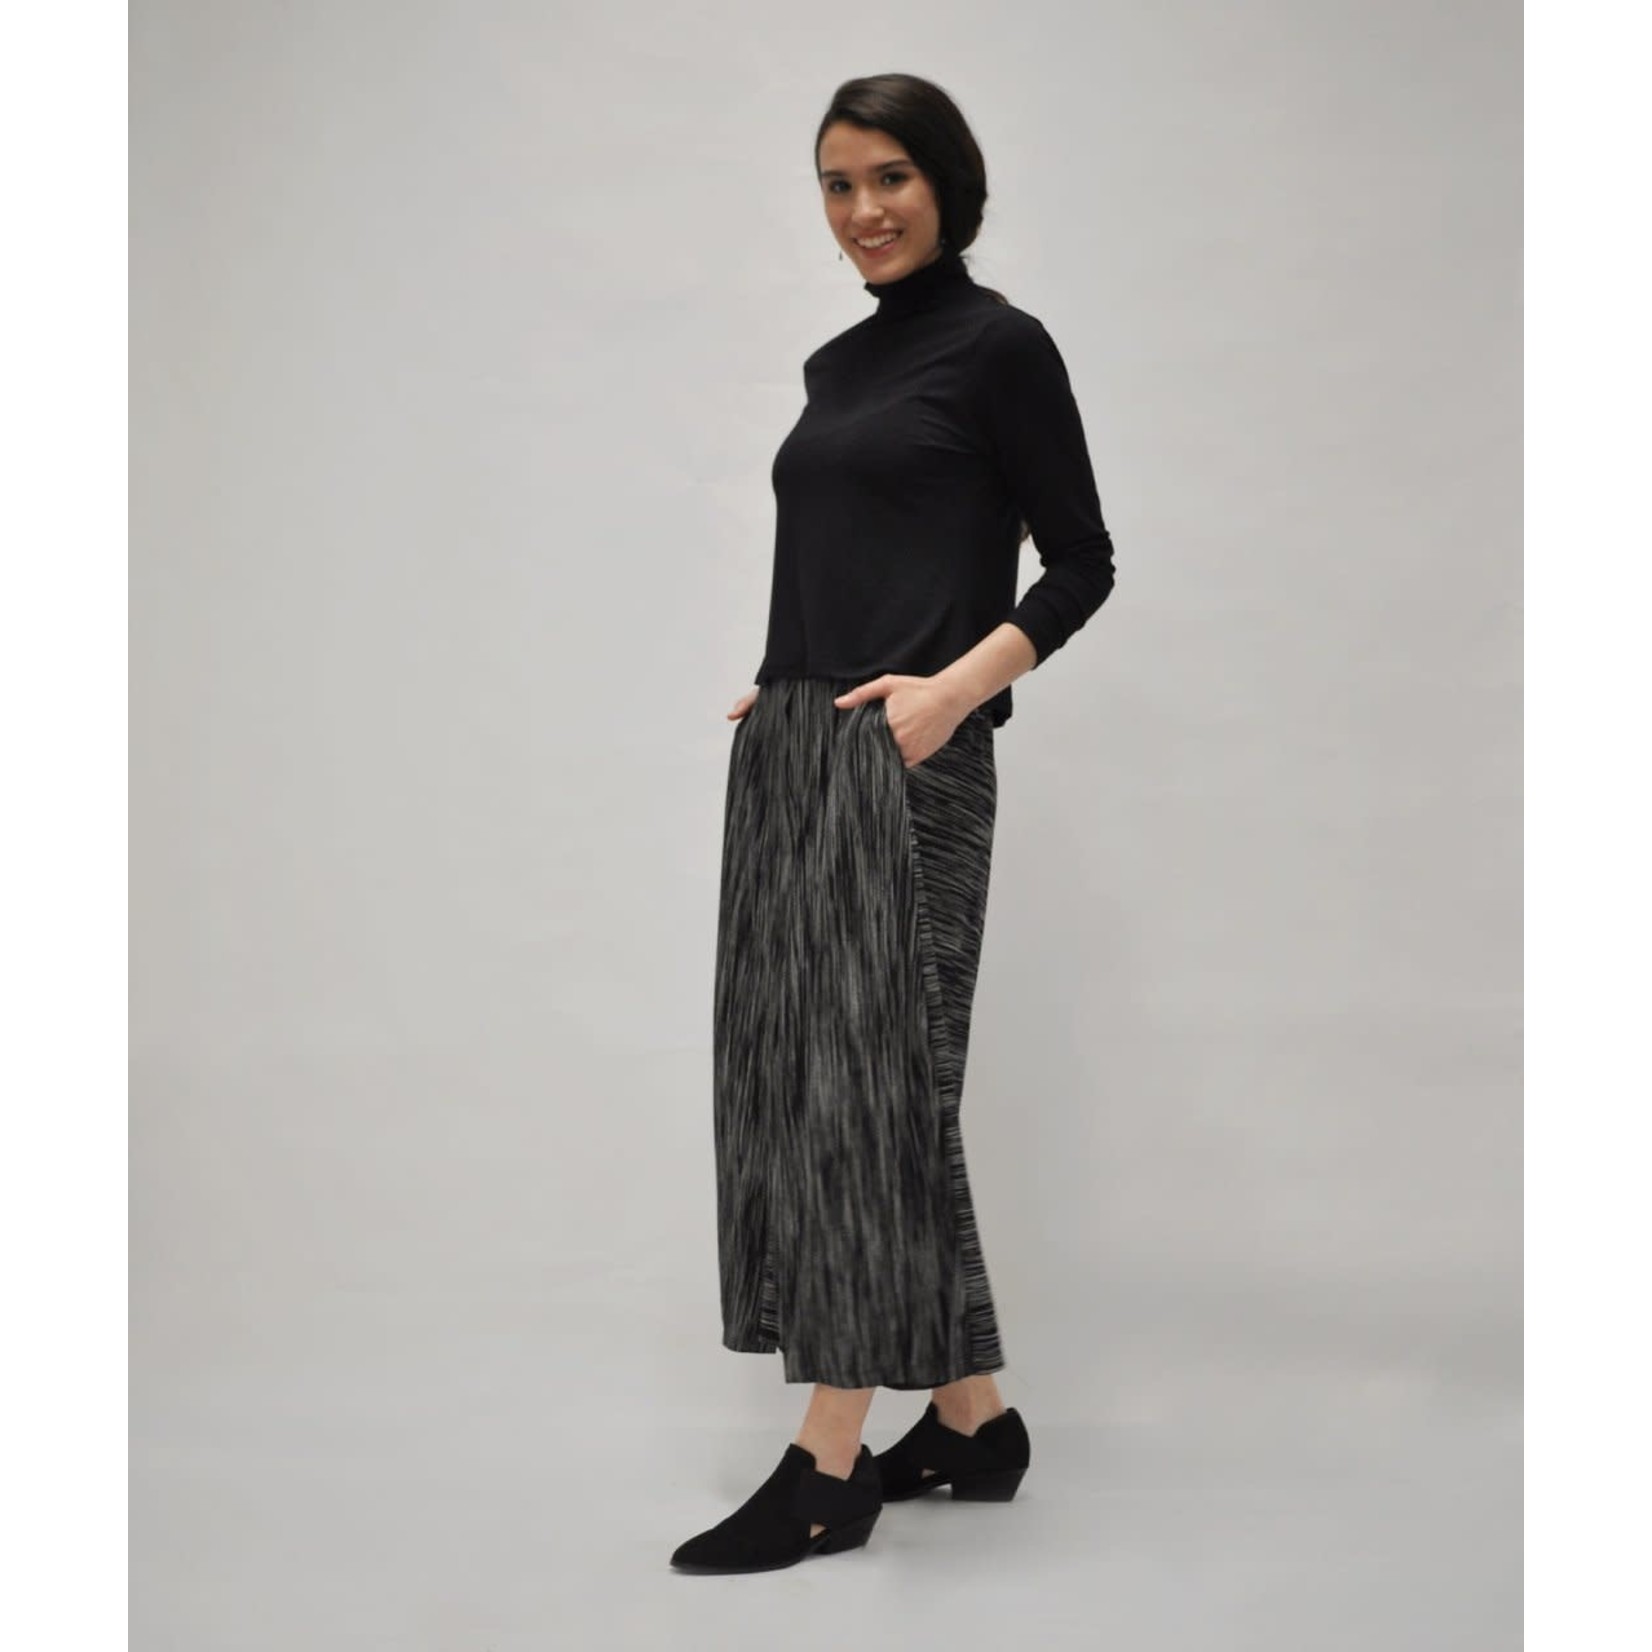 Niche Horizon Knit Meadow Pant in Black Multi